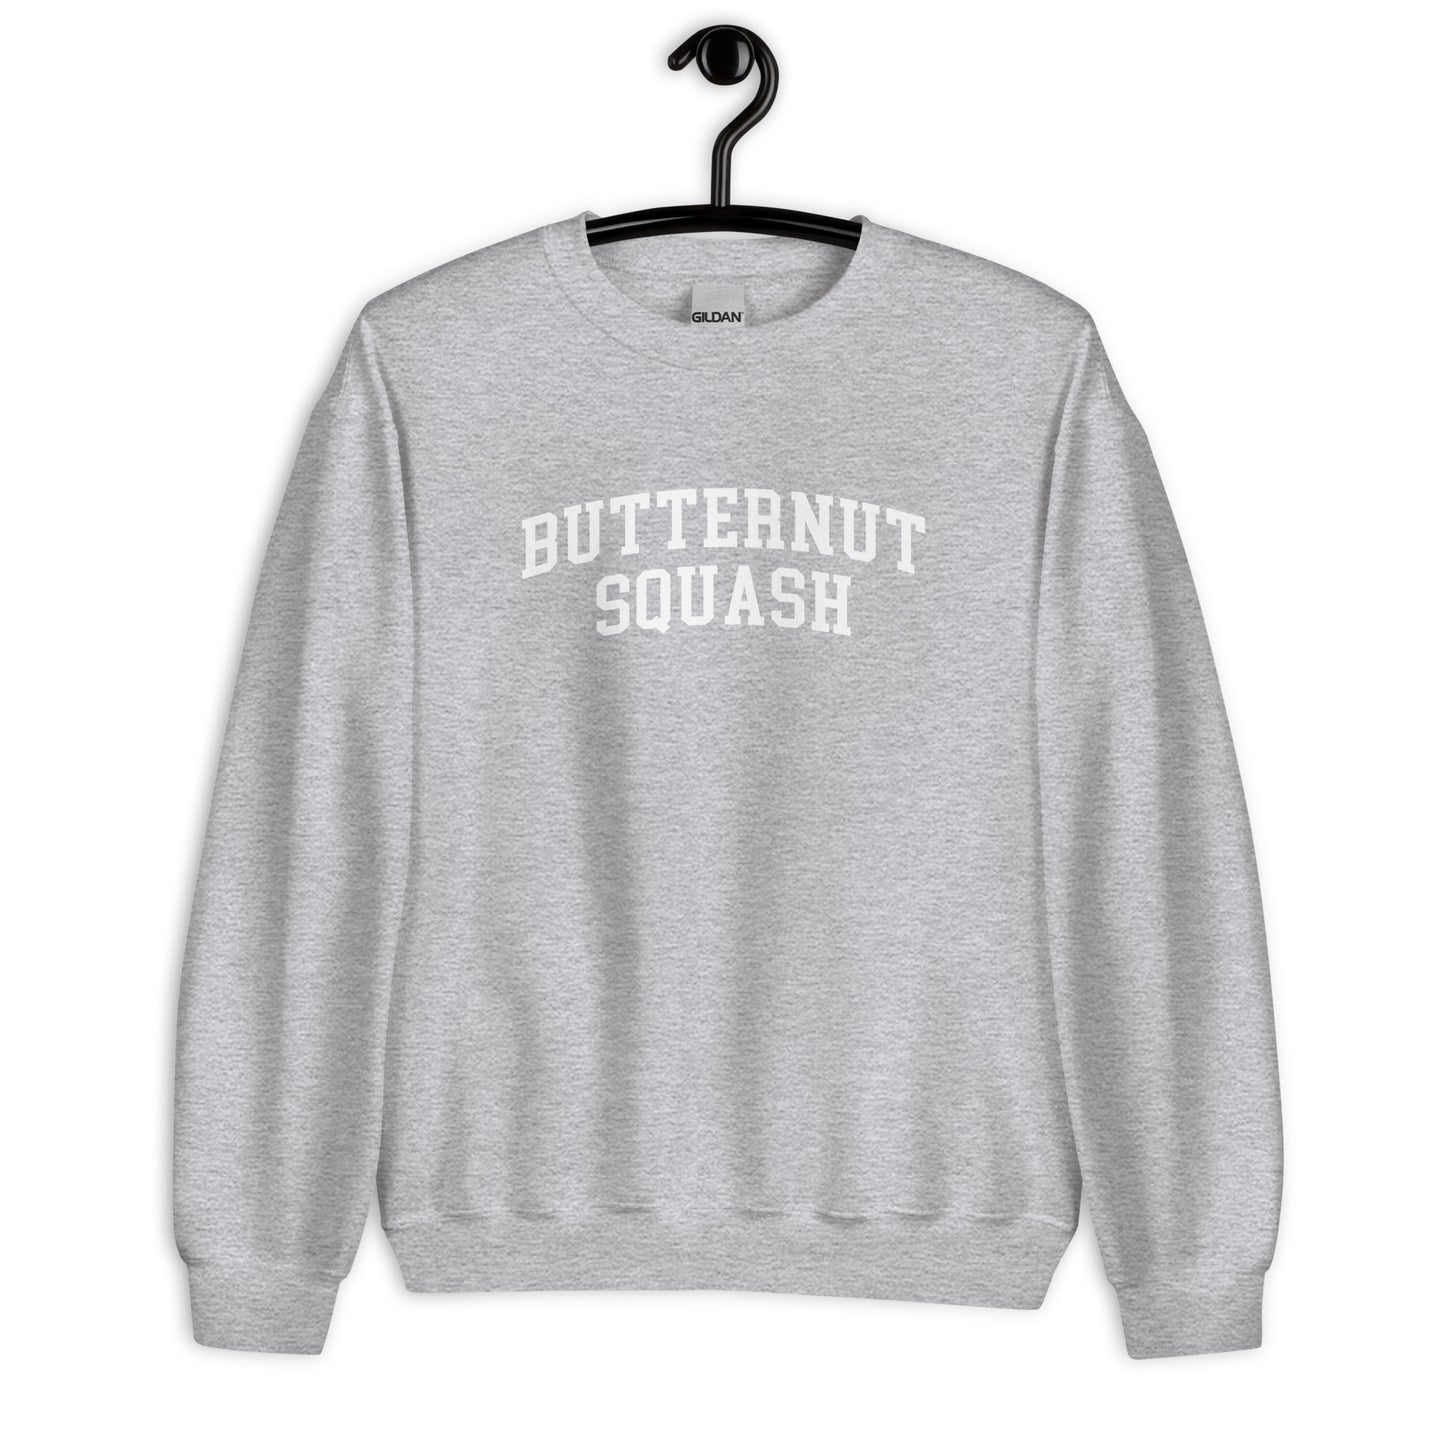 Butternut Squash Sweatshirt - Arched Font